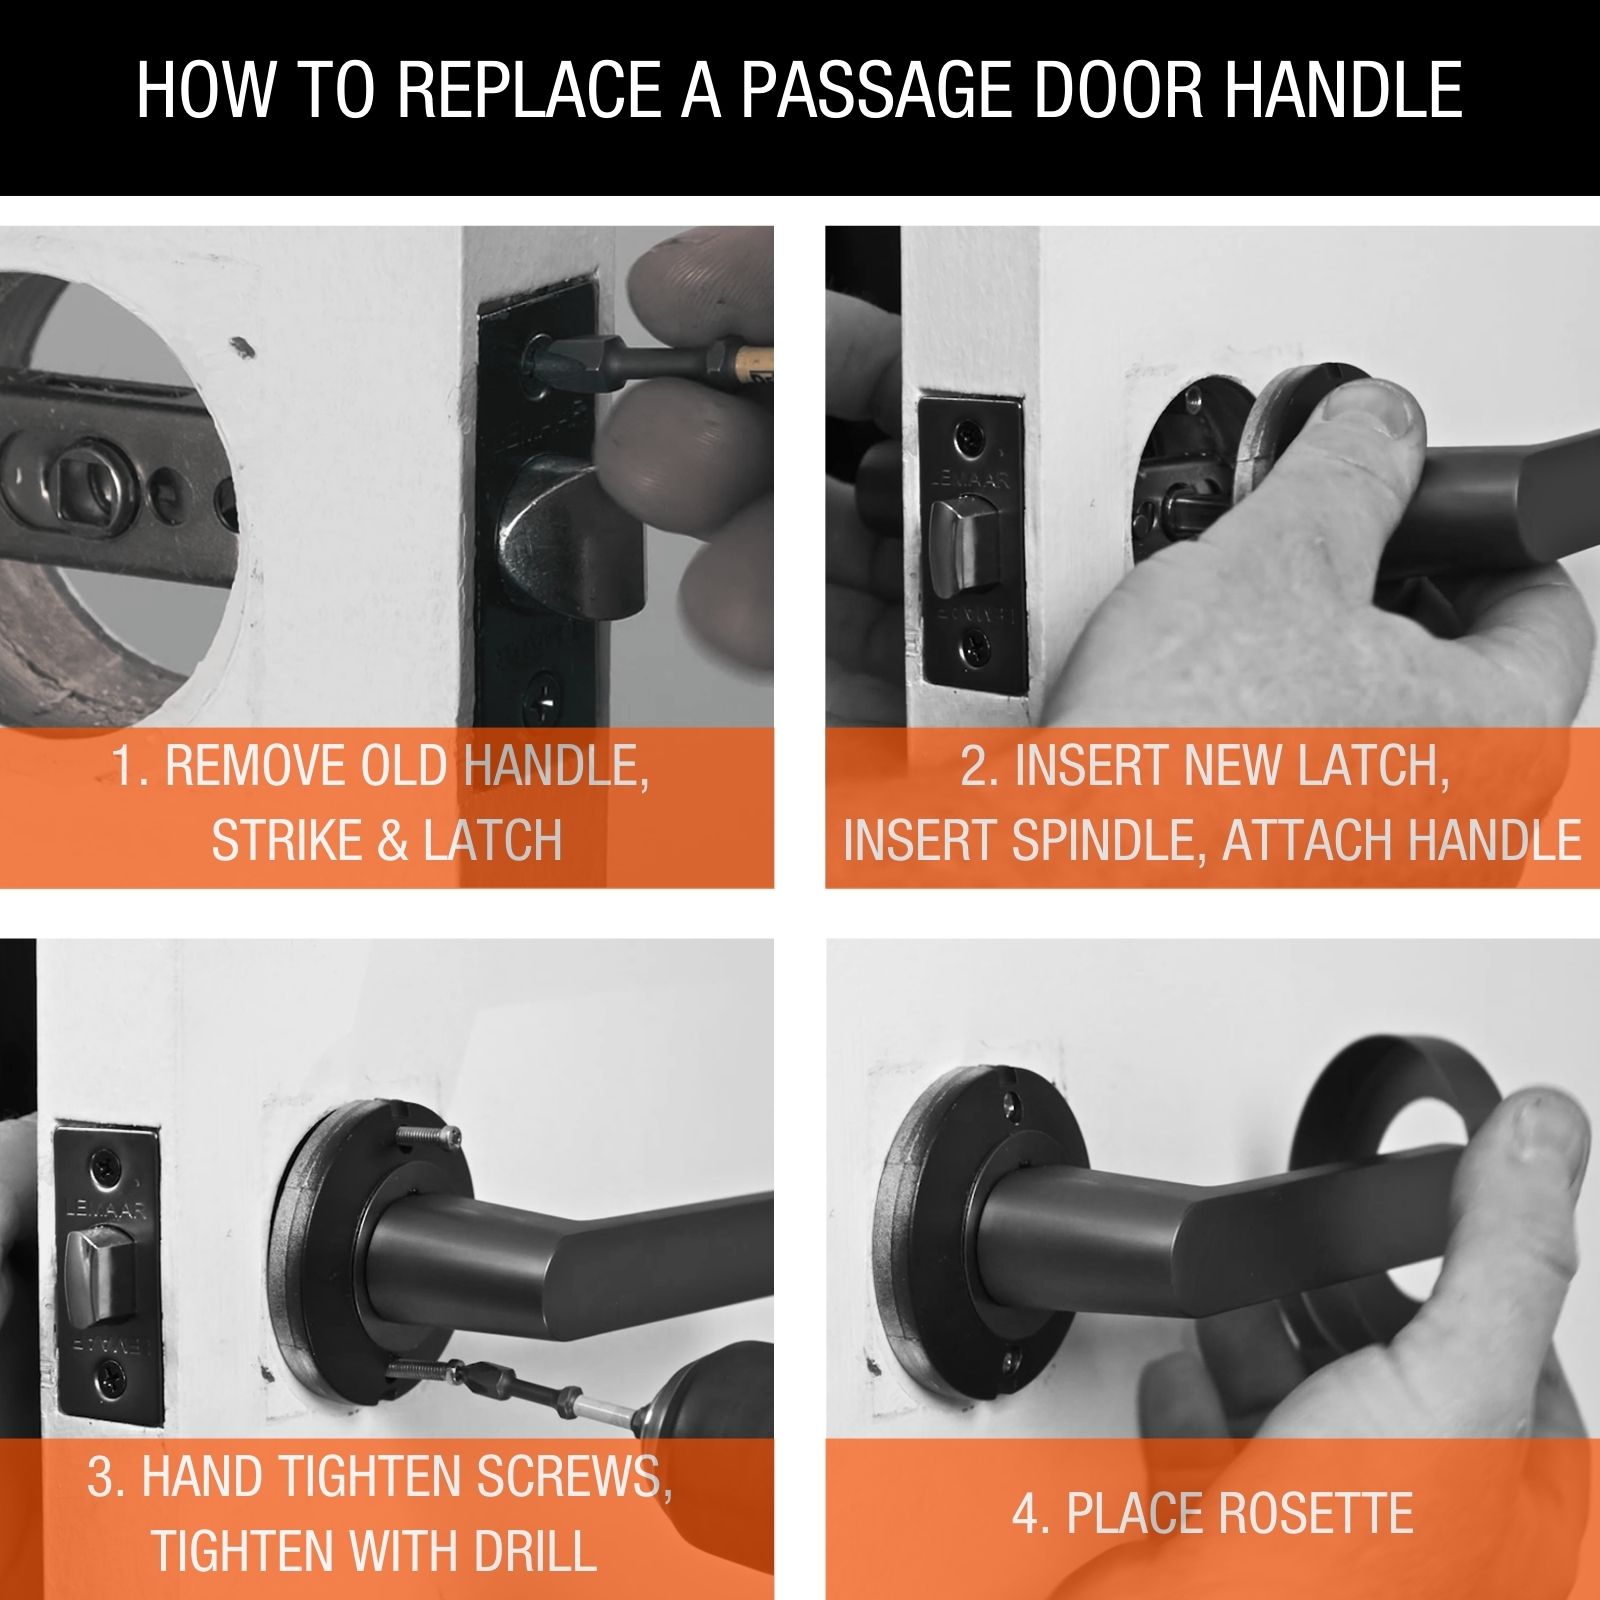 HOW TO REPLACE A PASSAGE DOOR HANDLE 2